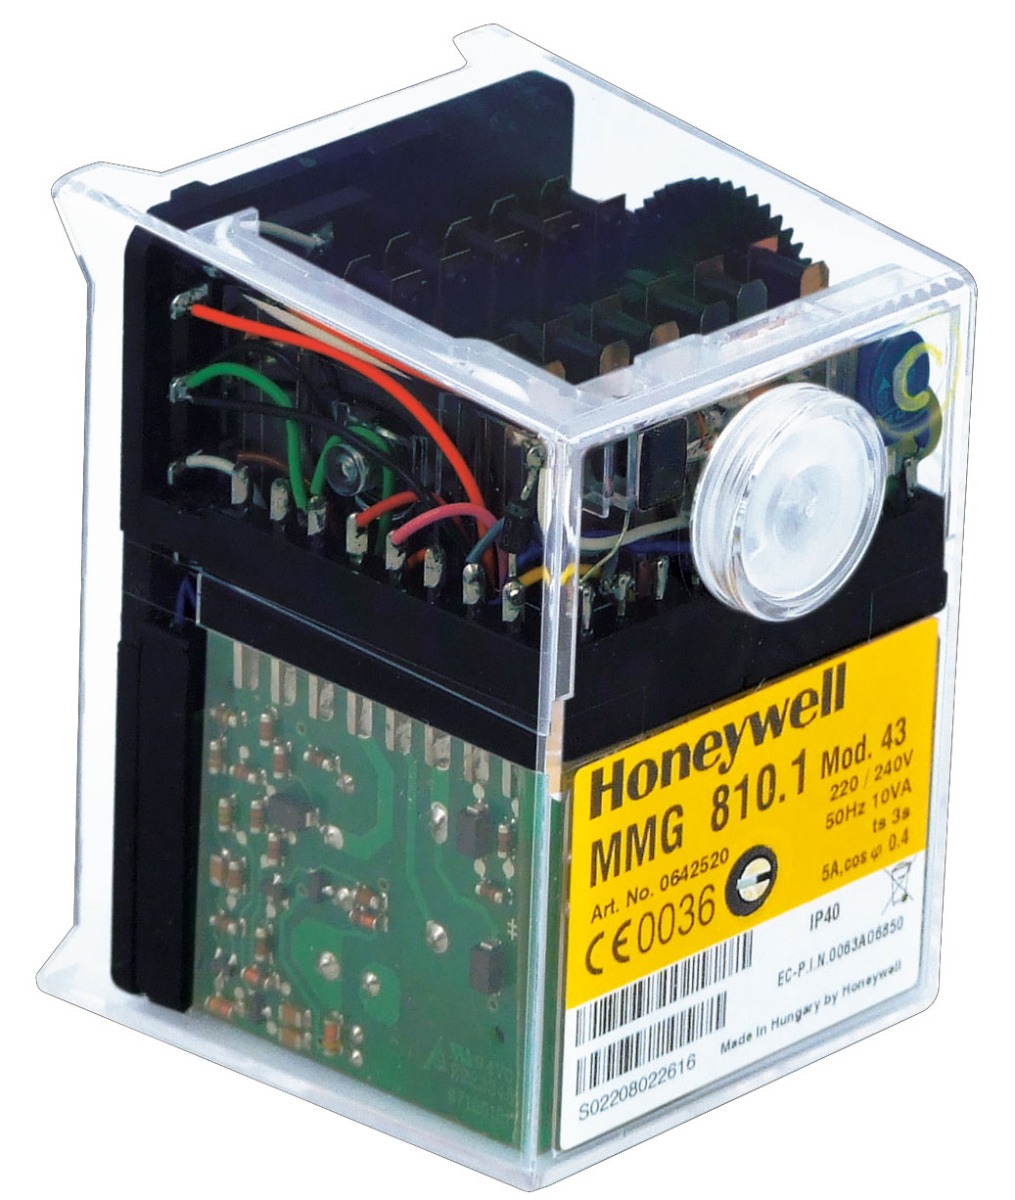 MMG 810.1 Mod 45 240v Control Box